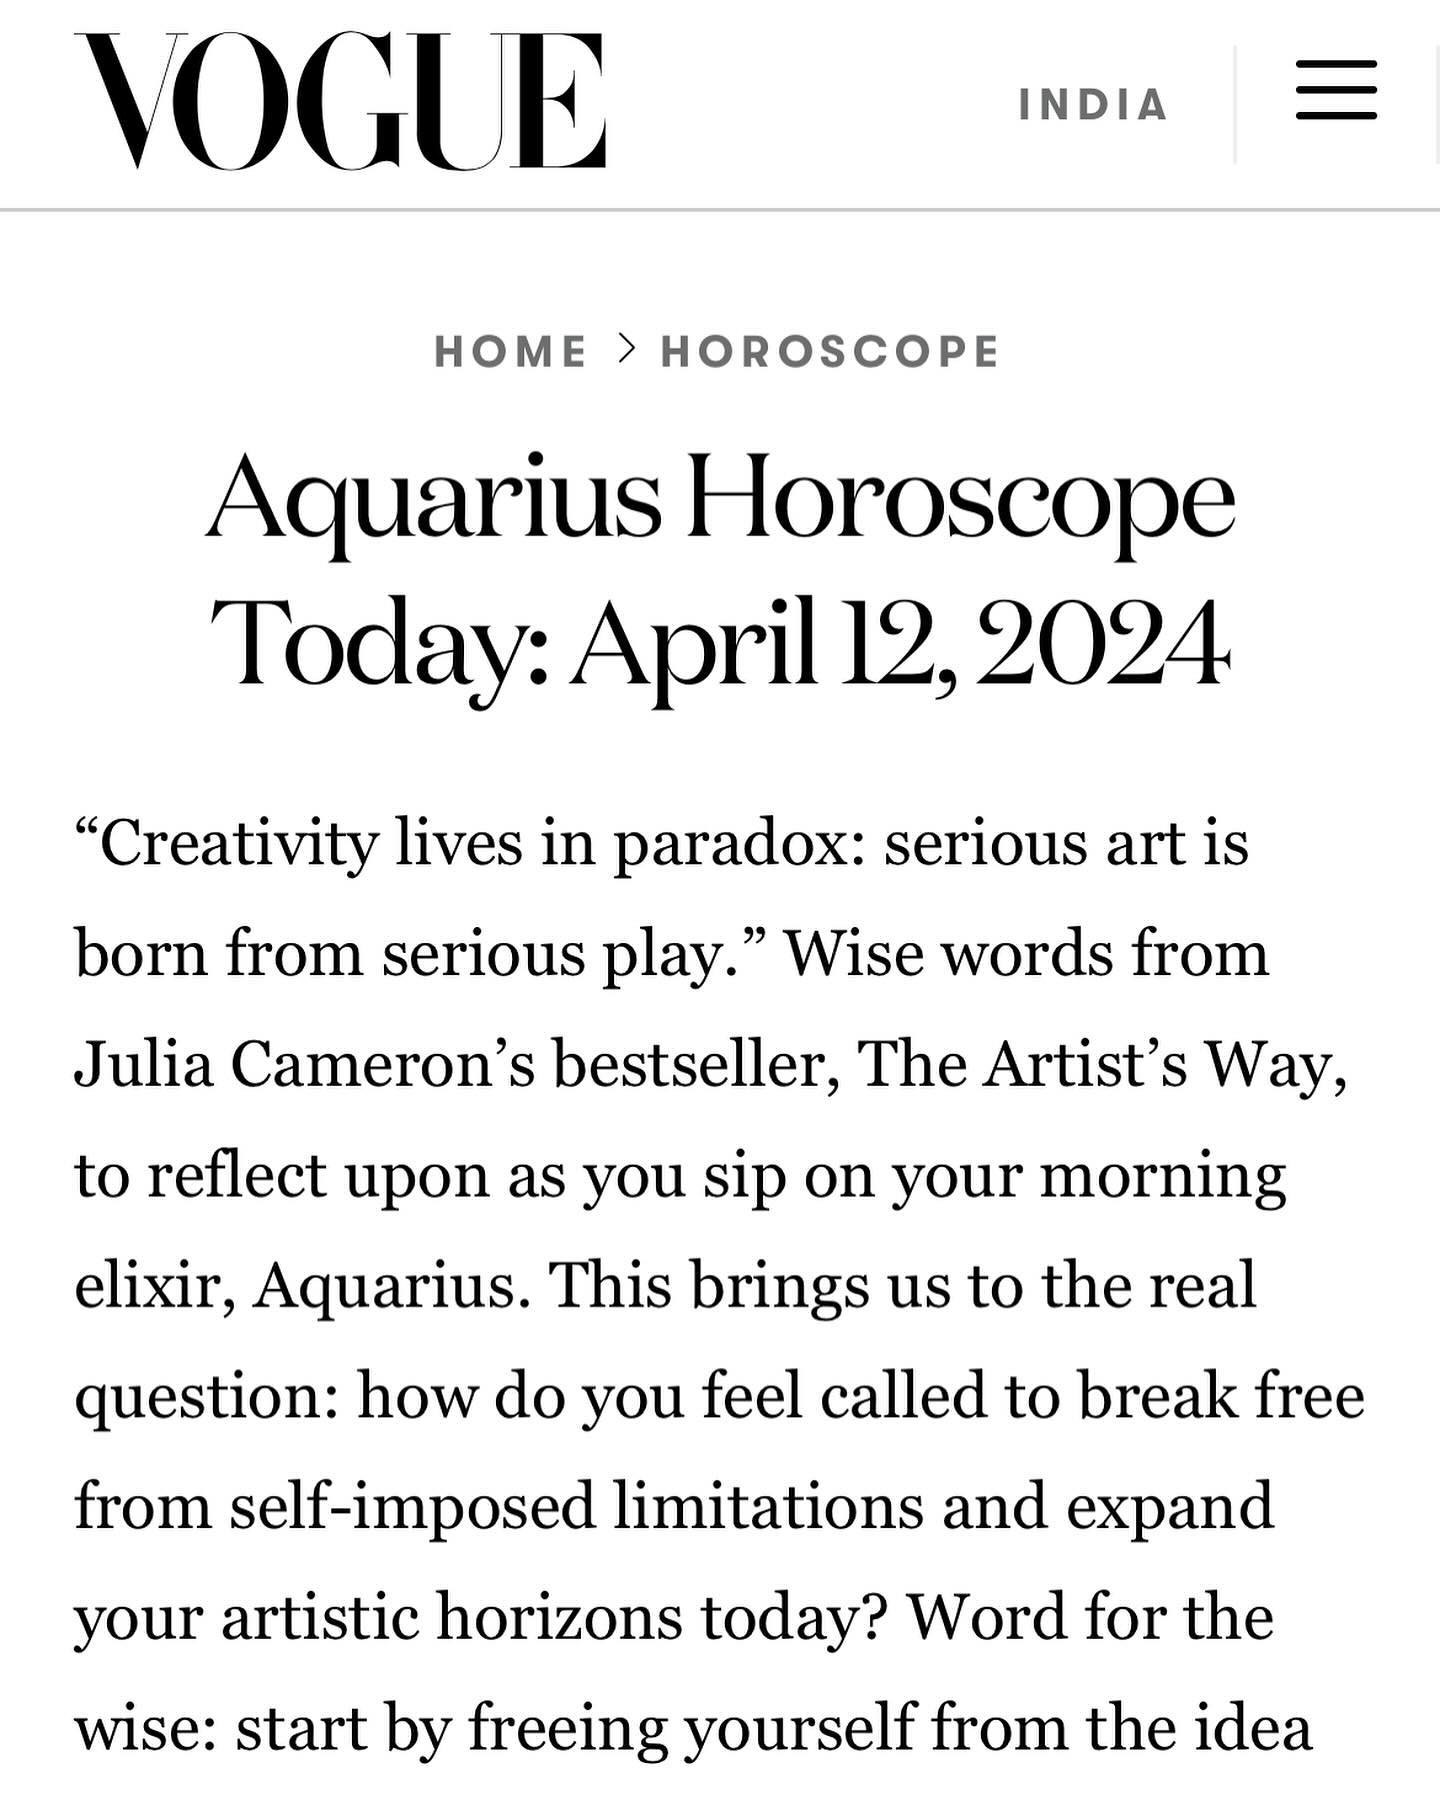 @vogueindia @tarcherperigee @souvenir_press https://www.vogue.in/horoscope/product/aquarius-horoscope-today-april-12-2024/